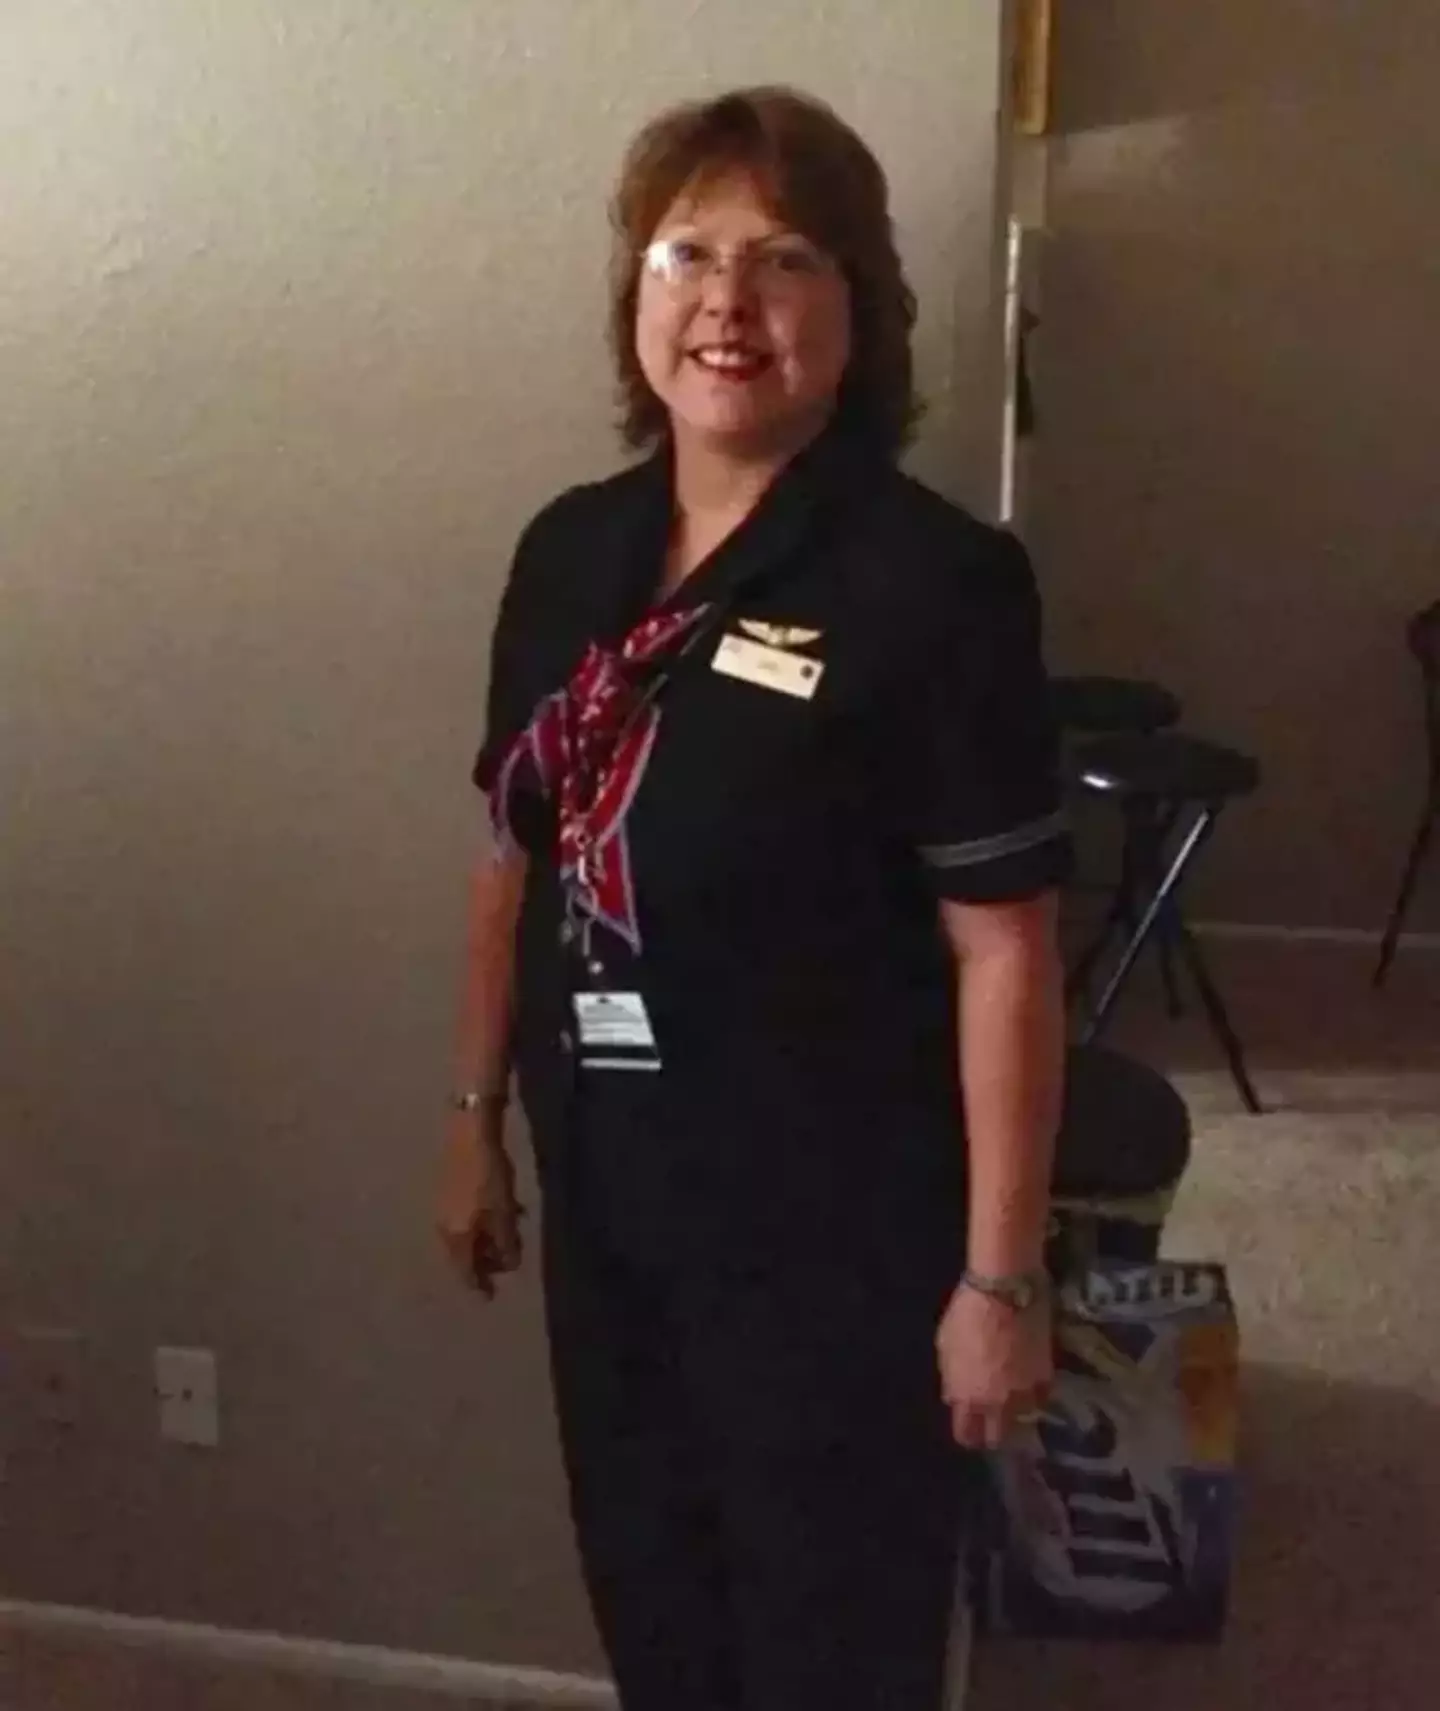 Flight attendant Diana Ramos was found dead in her hotel room.